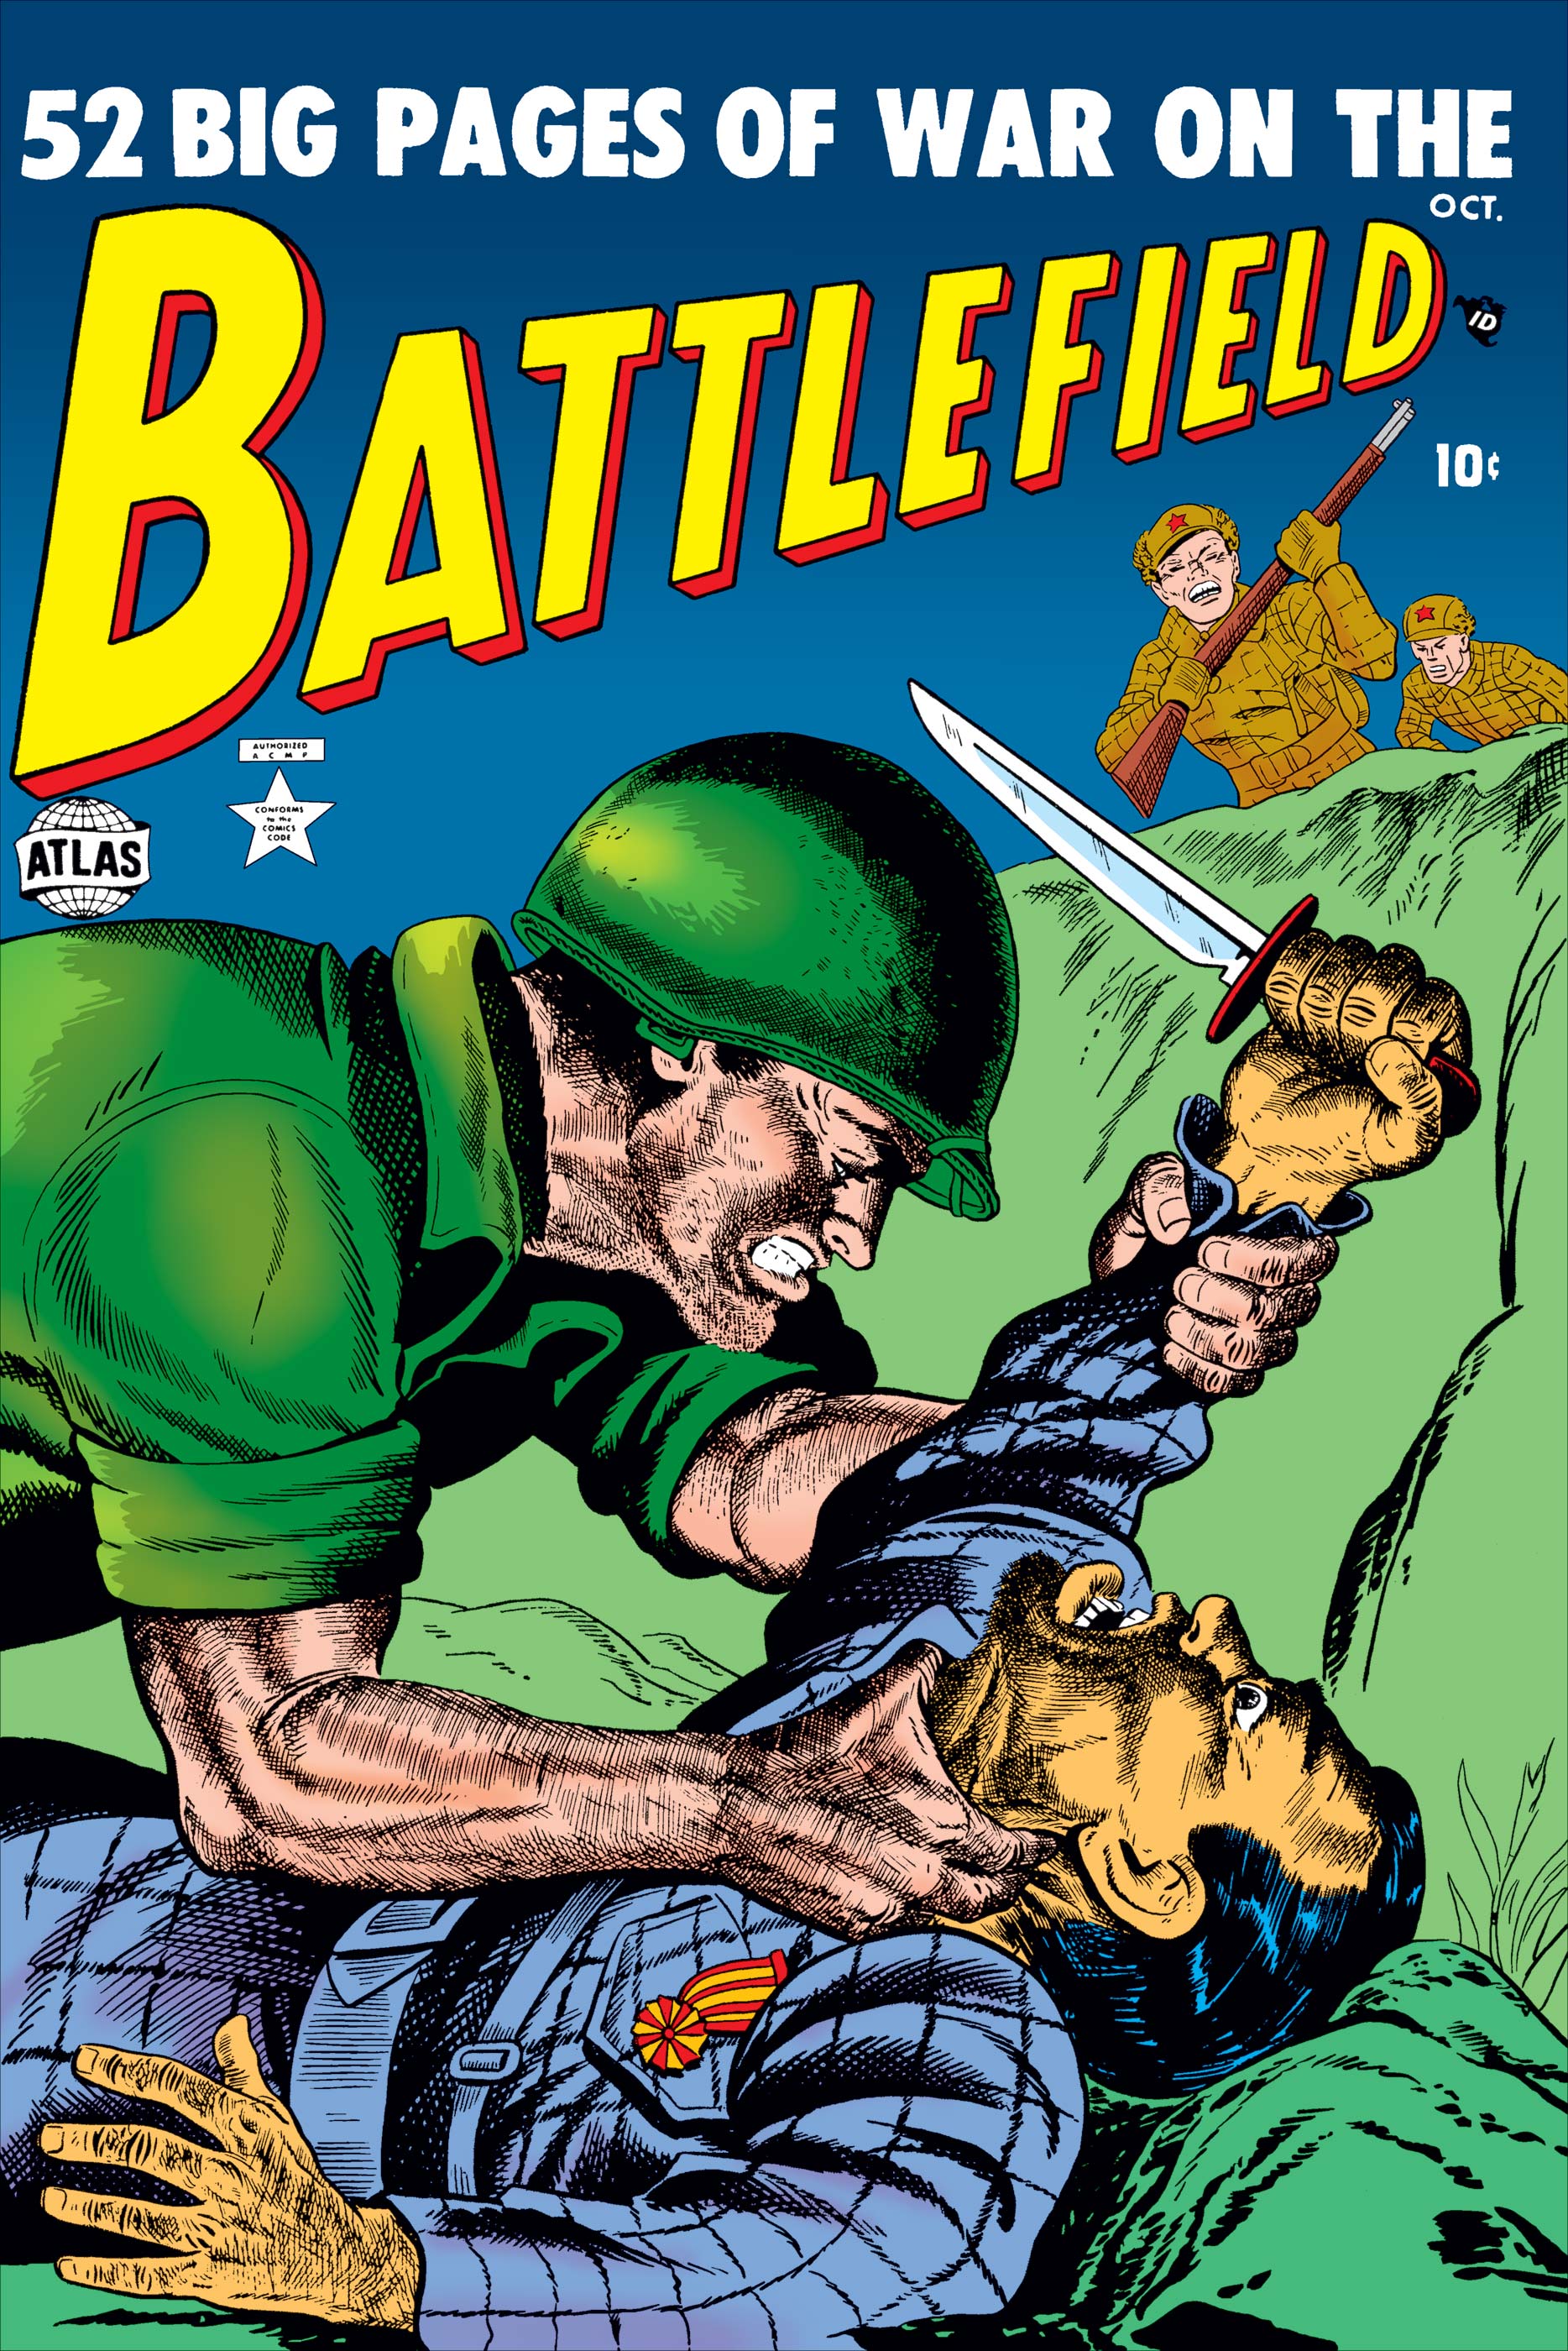 Battlefield (1952) #4